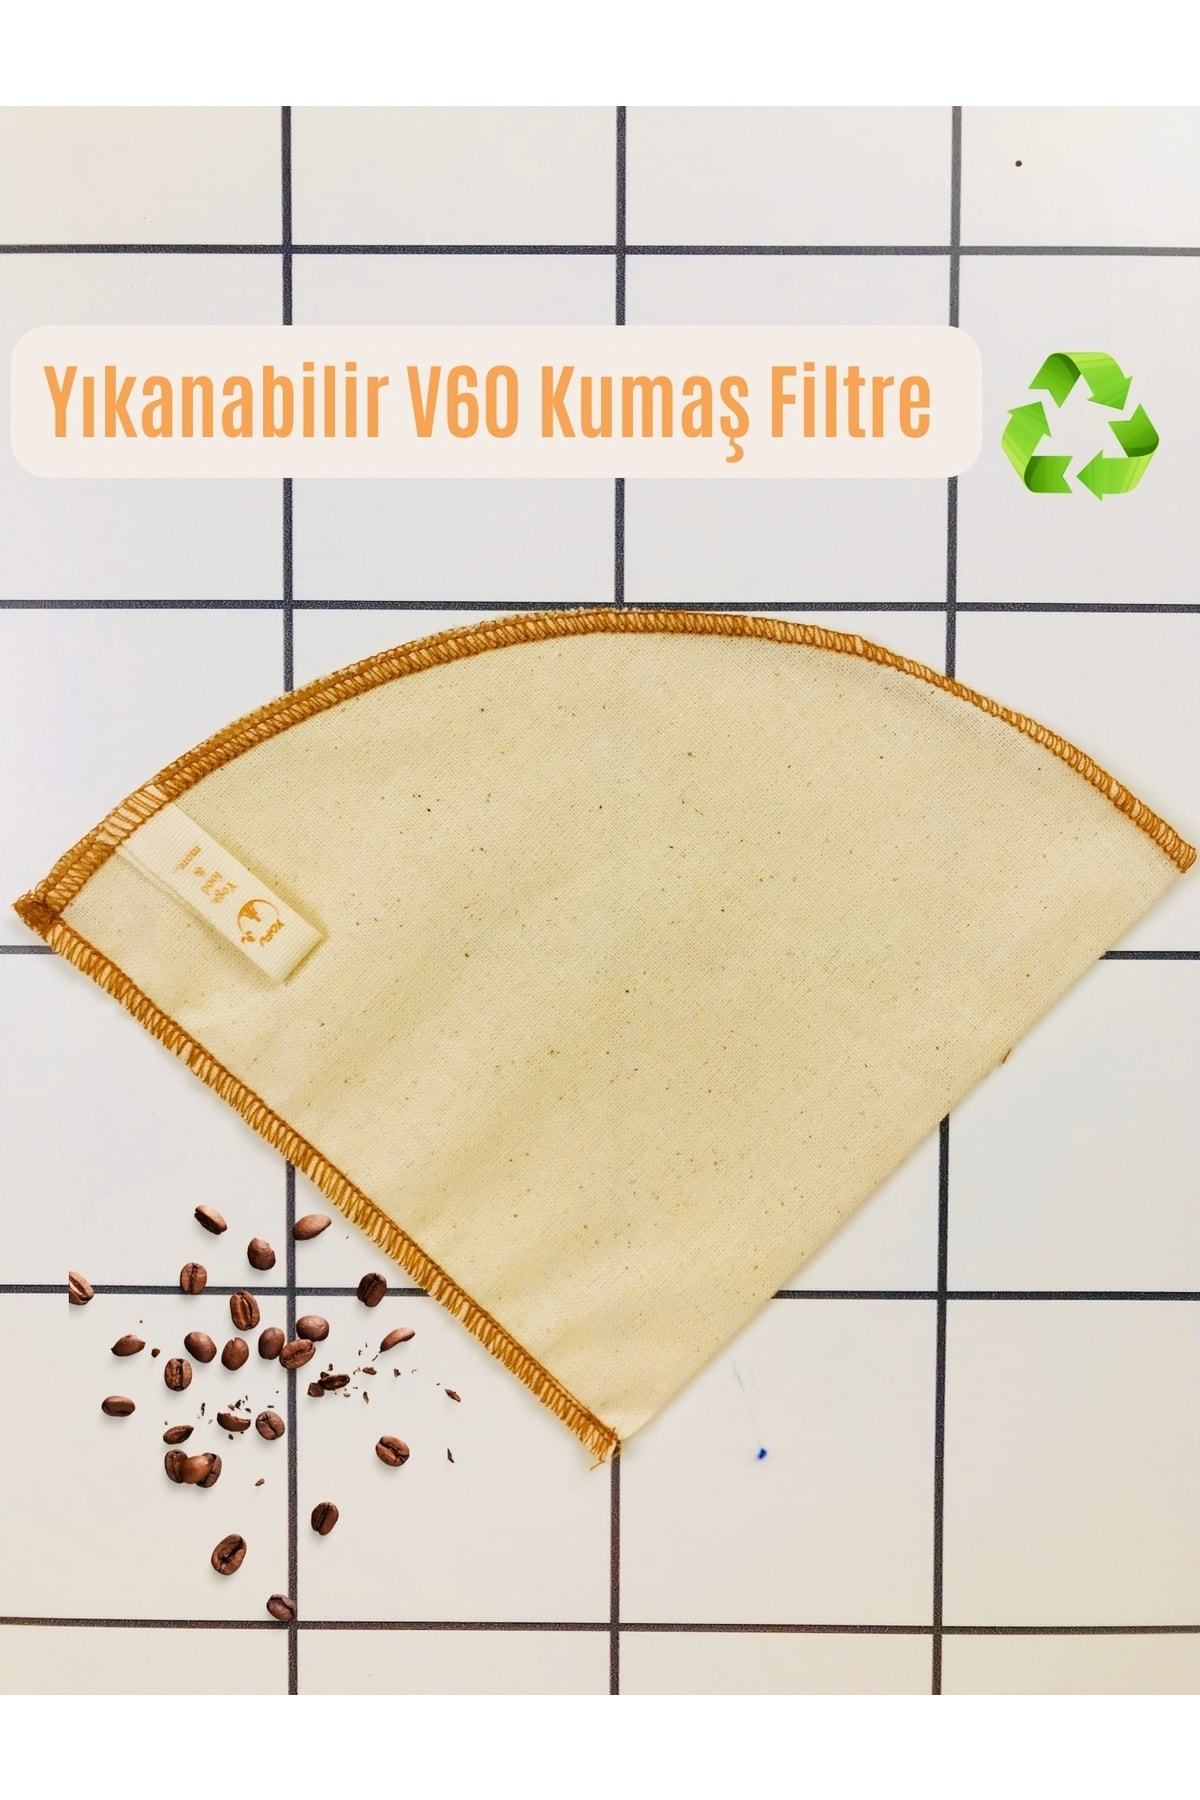 YOFU V60 Kumaş Kahve Filtresi Yıkanabilir Kahve Filtresi-%100 Ham Pamuk- Yıkanabilir - Organik